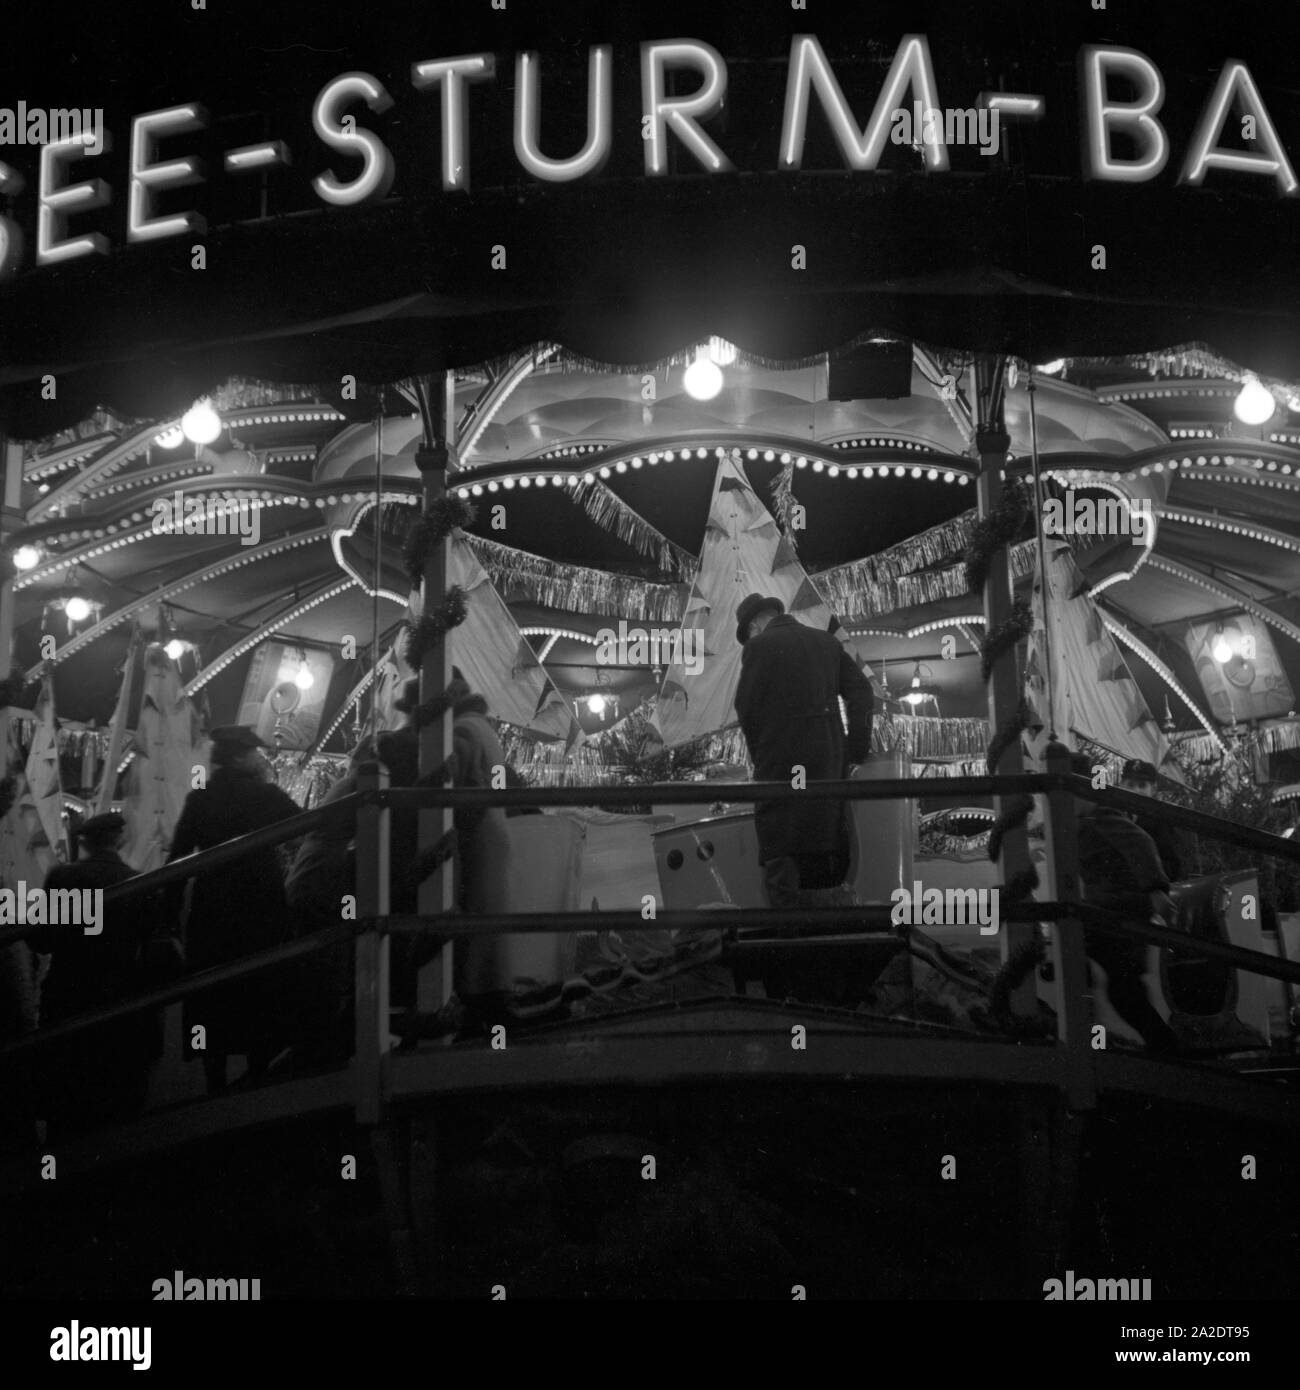 Die Voir Sturm Bahn, ein auf dem Fahrgeschäft Weihnachtsmarkt Deutschland, 1930 er Jahre. La tempête sur la mer, un parc d'attraction du marché de noël de Berlin, Allemagne 1930. Banque D'Images